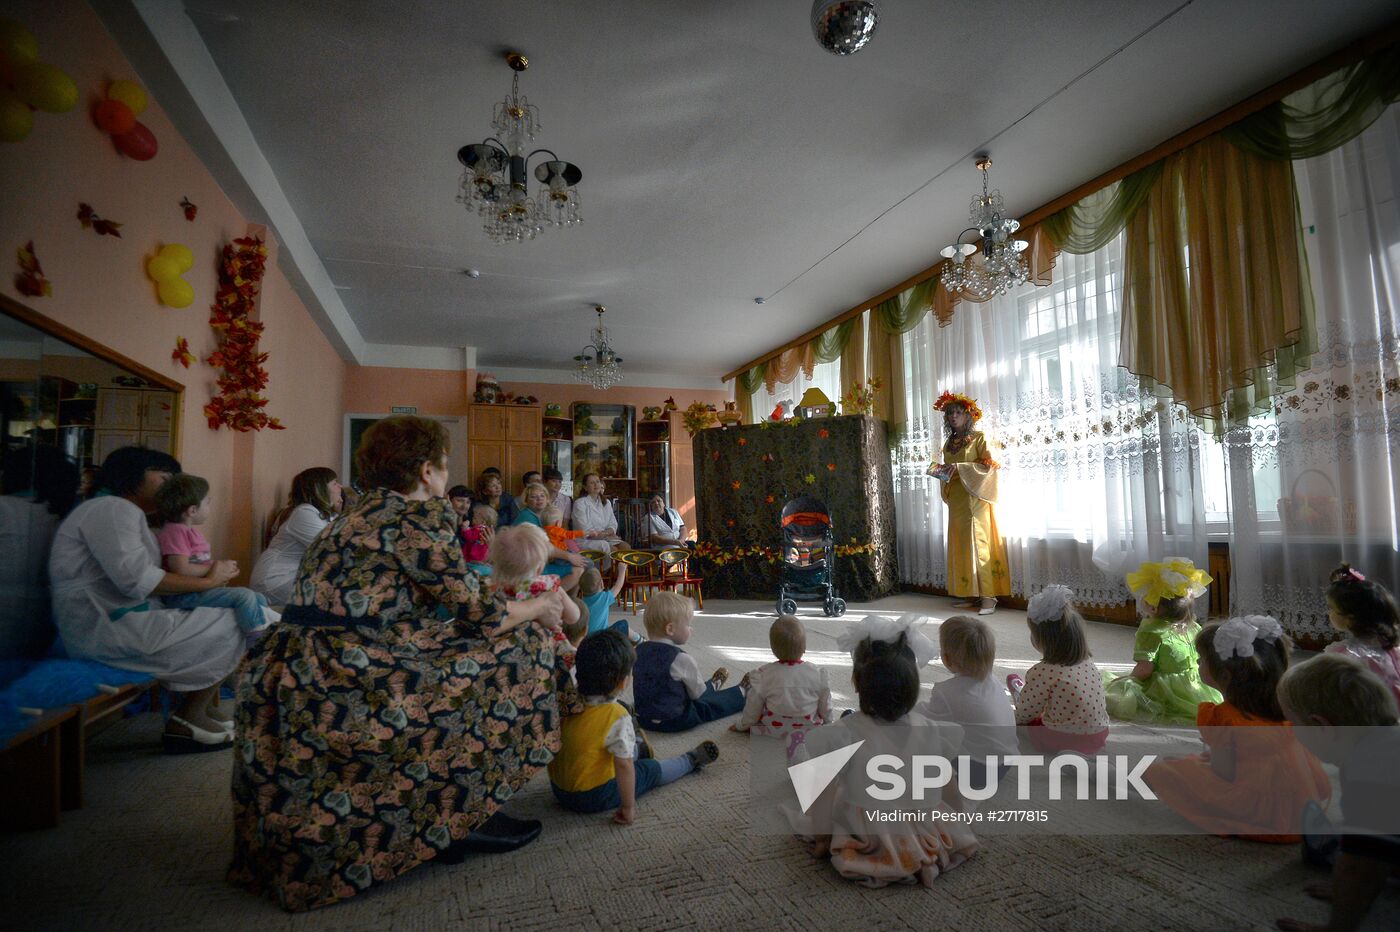 Train of Hope Program to Facilitate Adoption in Irkutsk